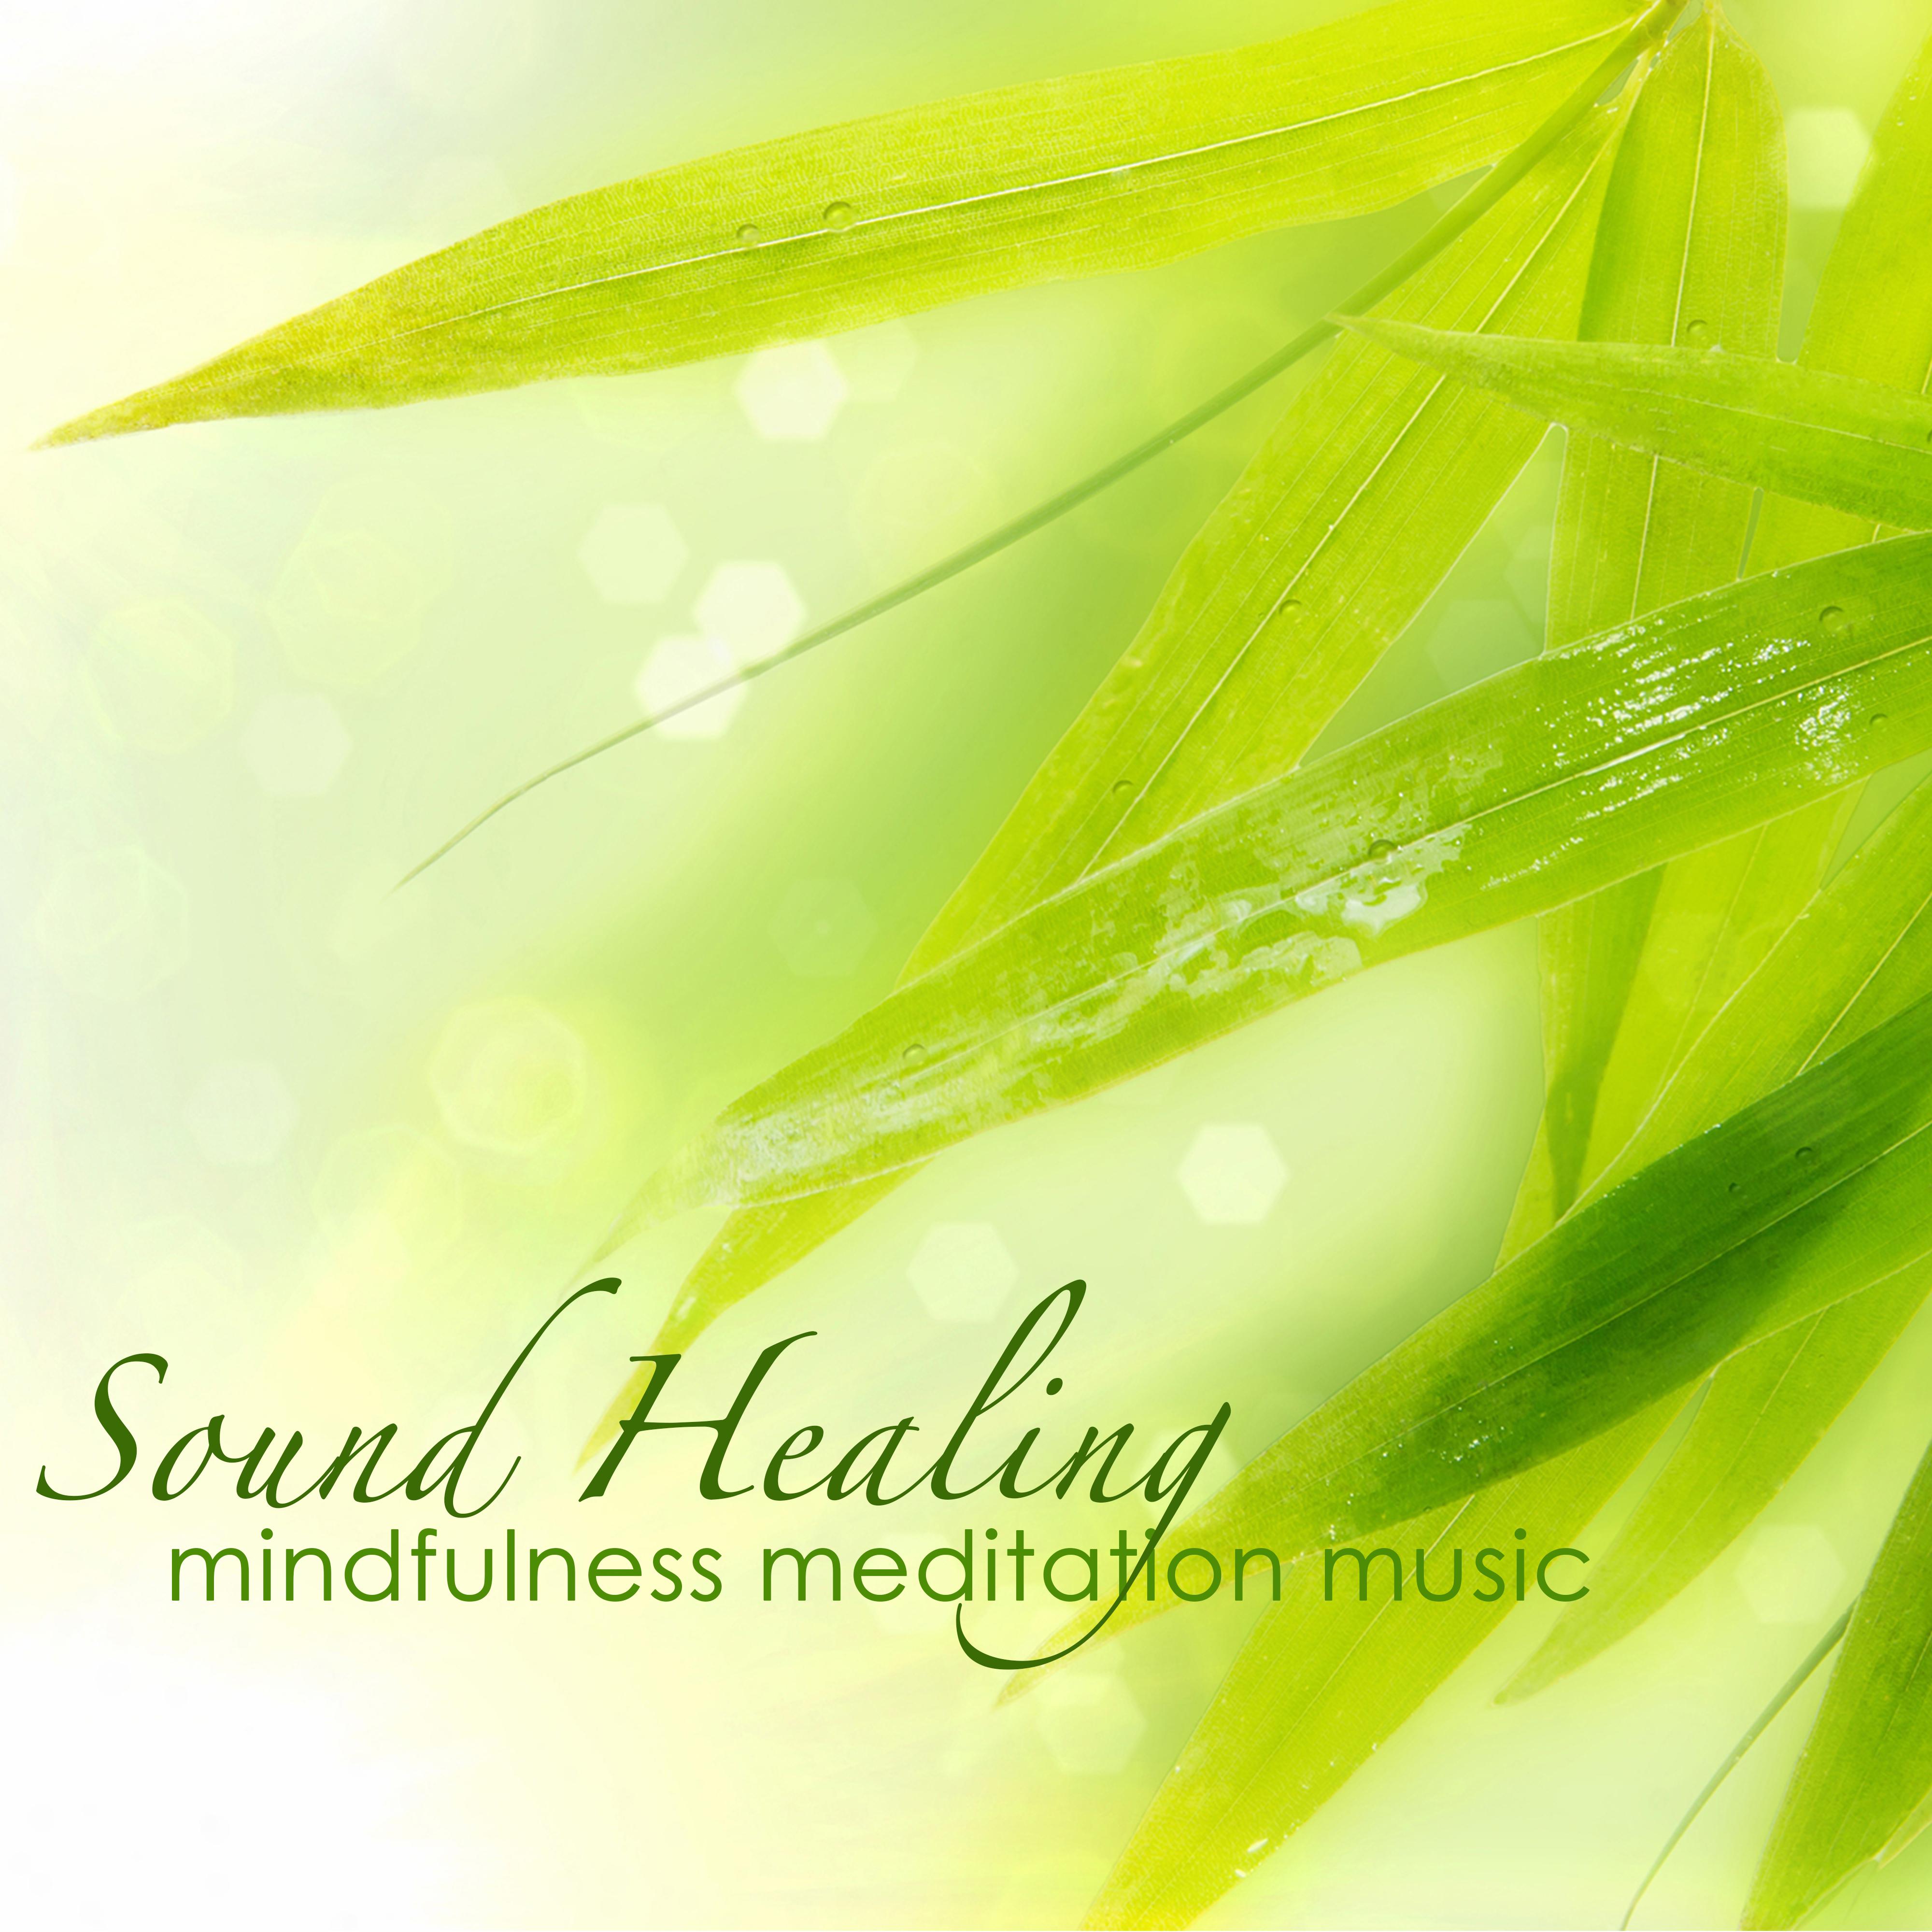 Sound Healing Mindfulness Meditation Music  Zen Nature Music for Deep Meditation and Pranayama Breathing